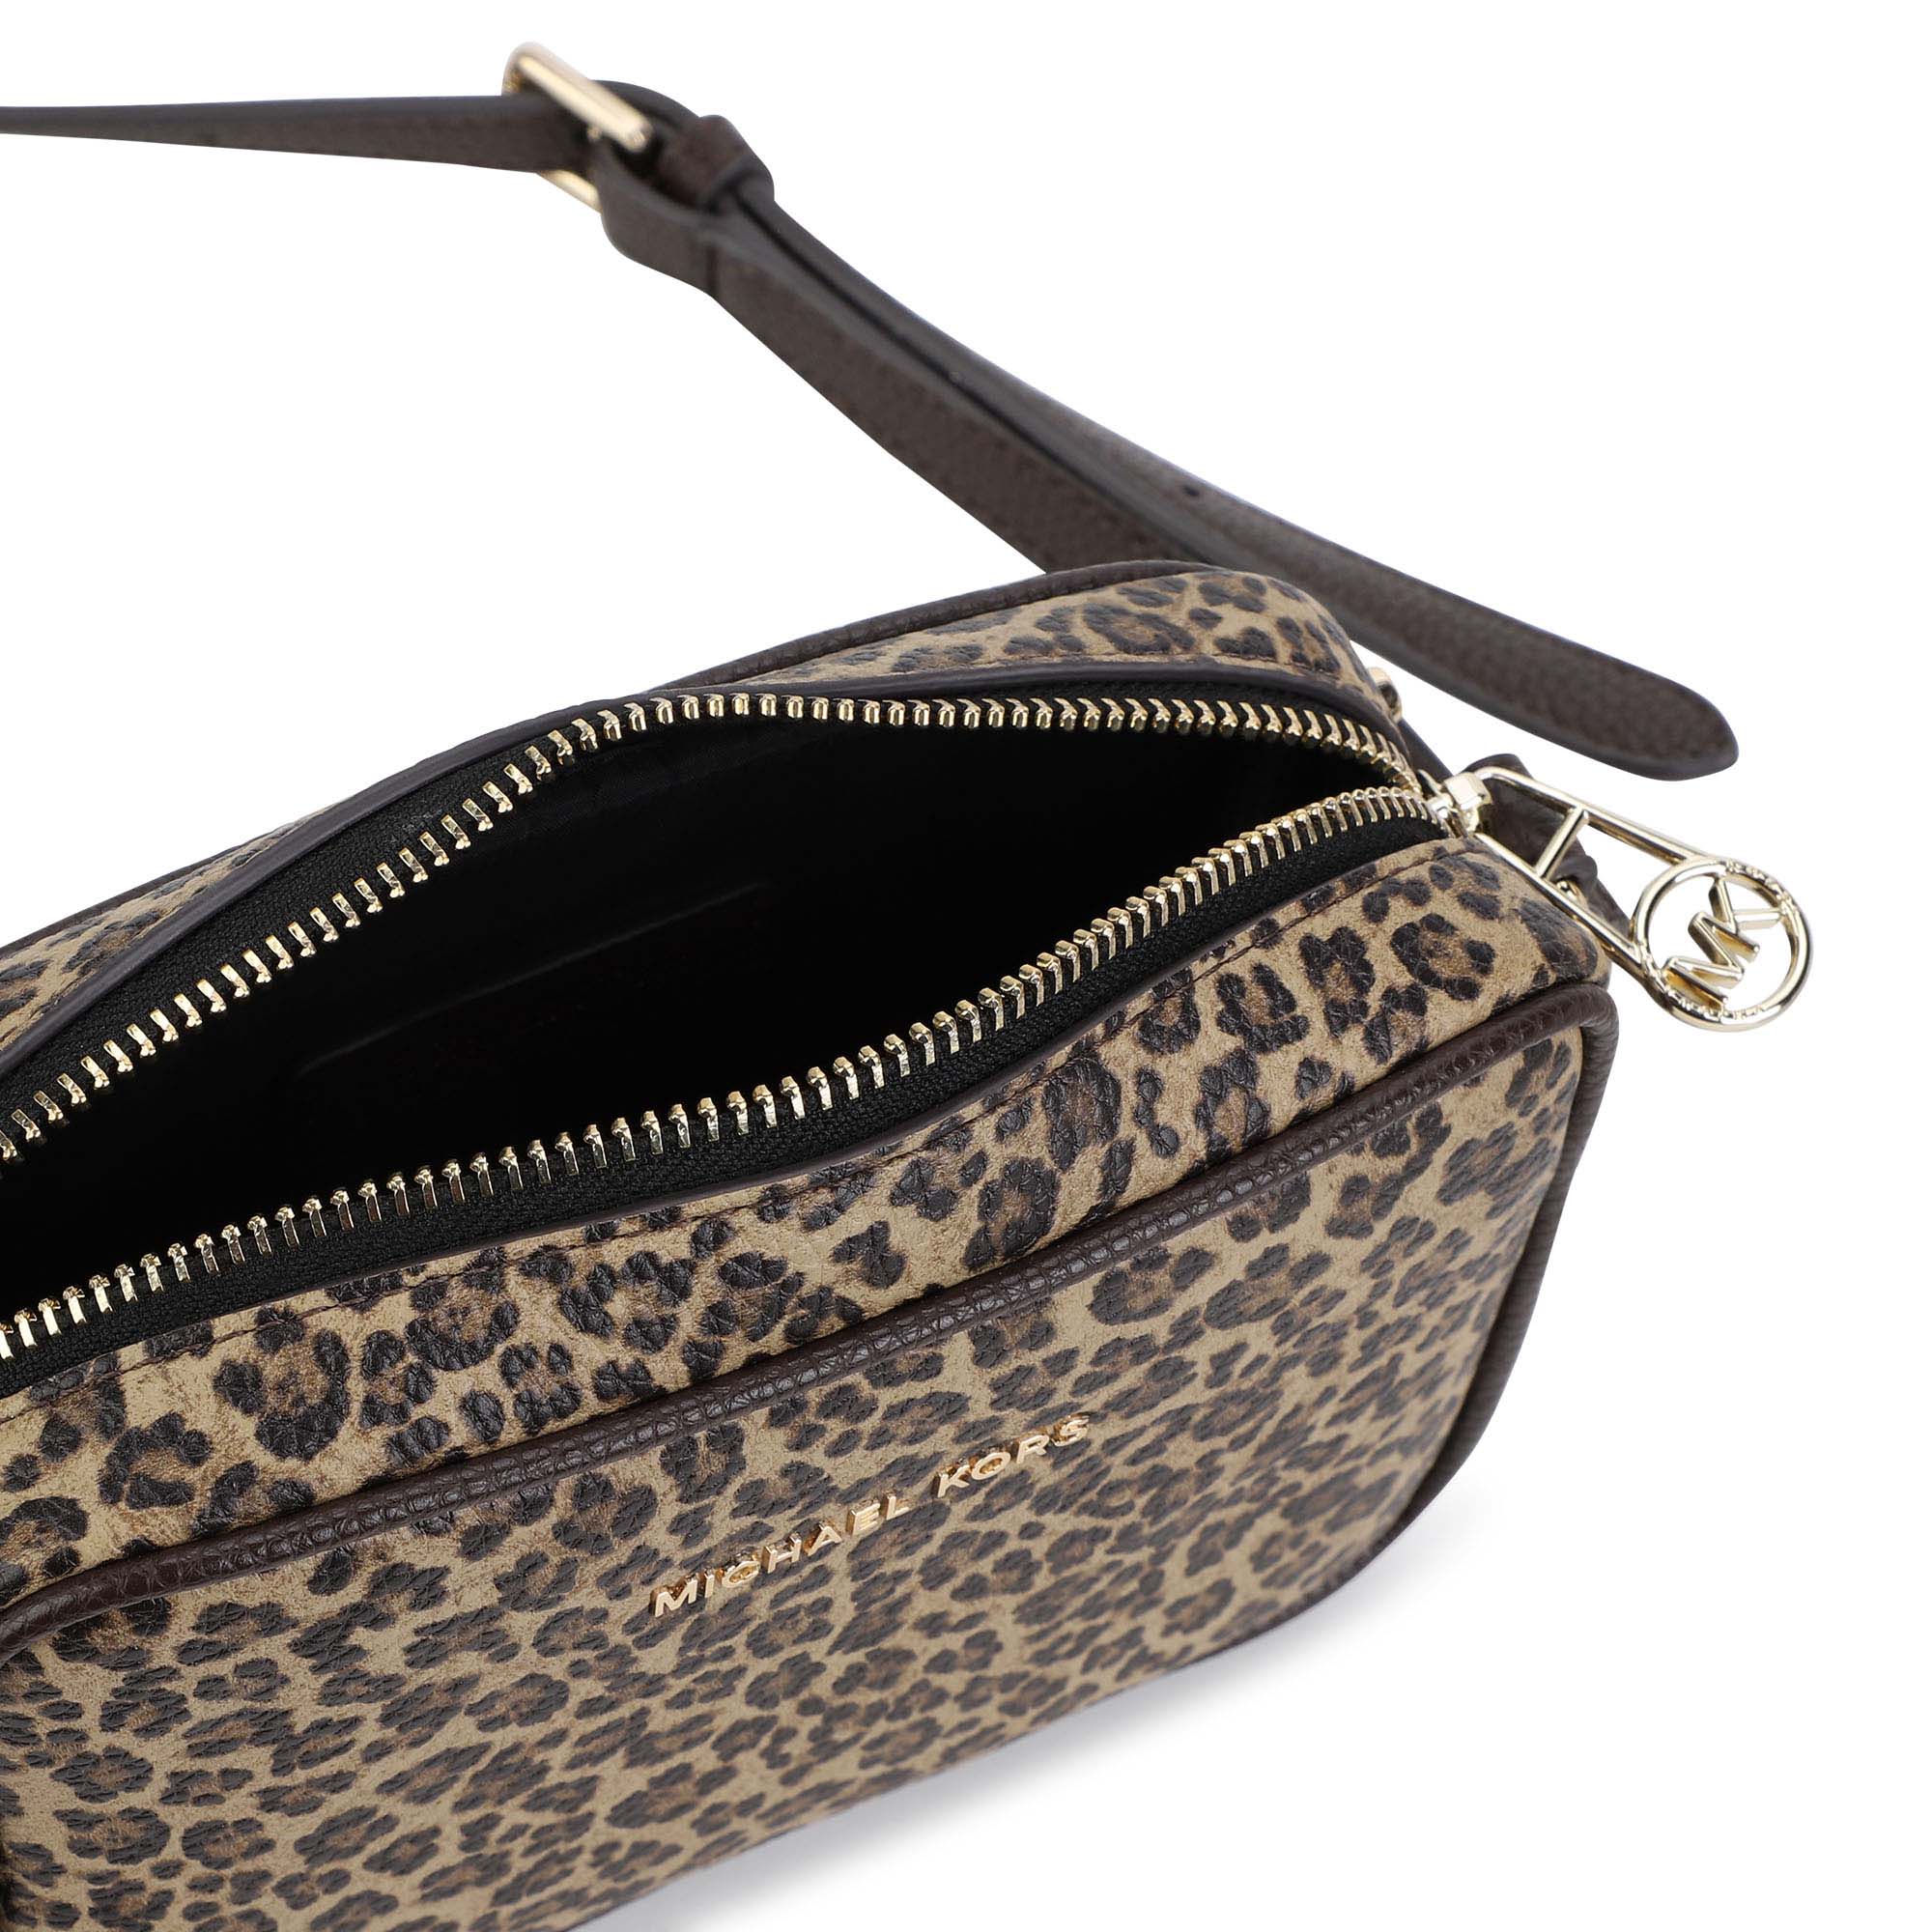 Michael Kors leopard tote handbag | Nuuly Thrift